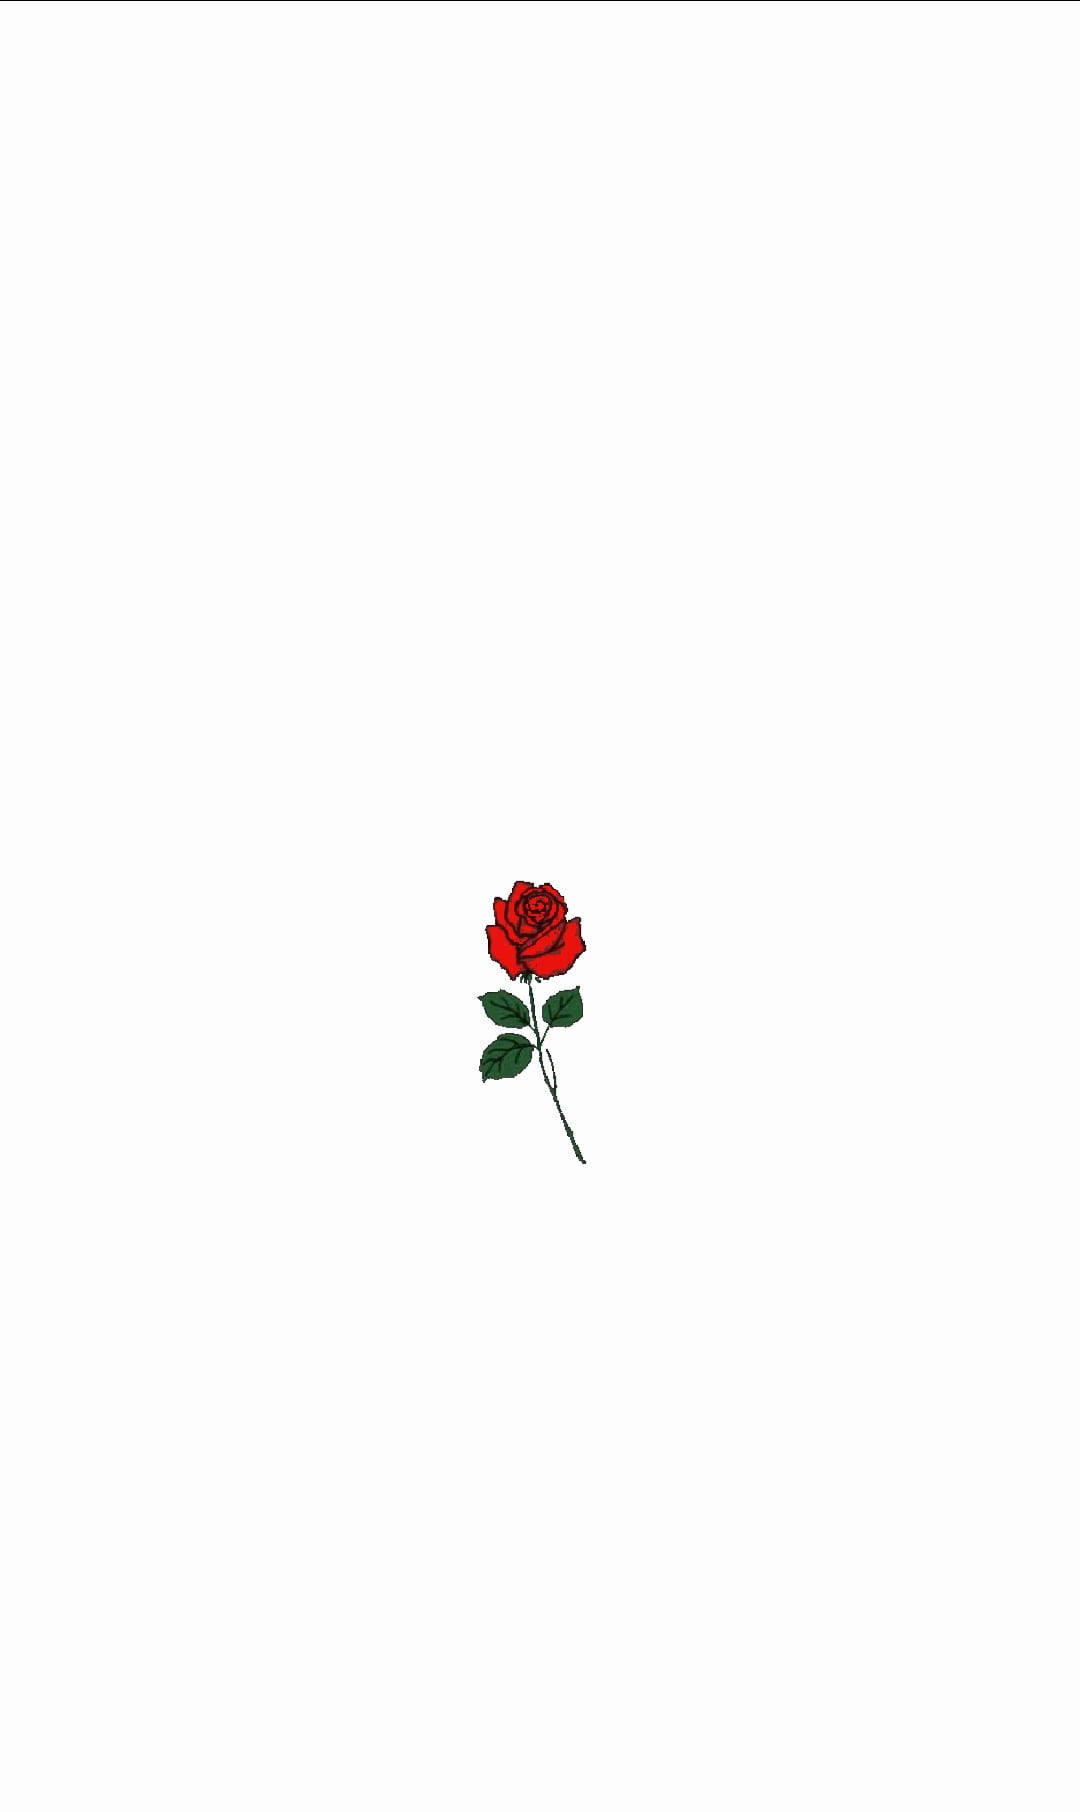 Minimalist Rose With Stem White Screen Wallpaper